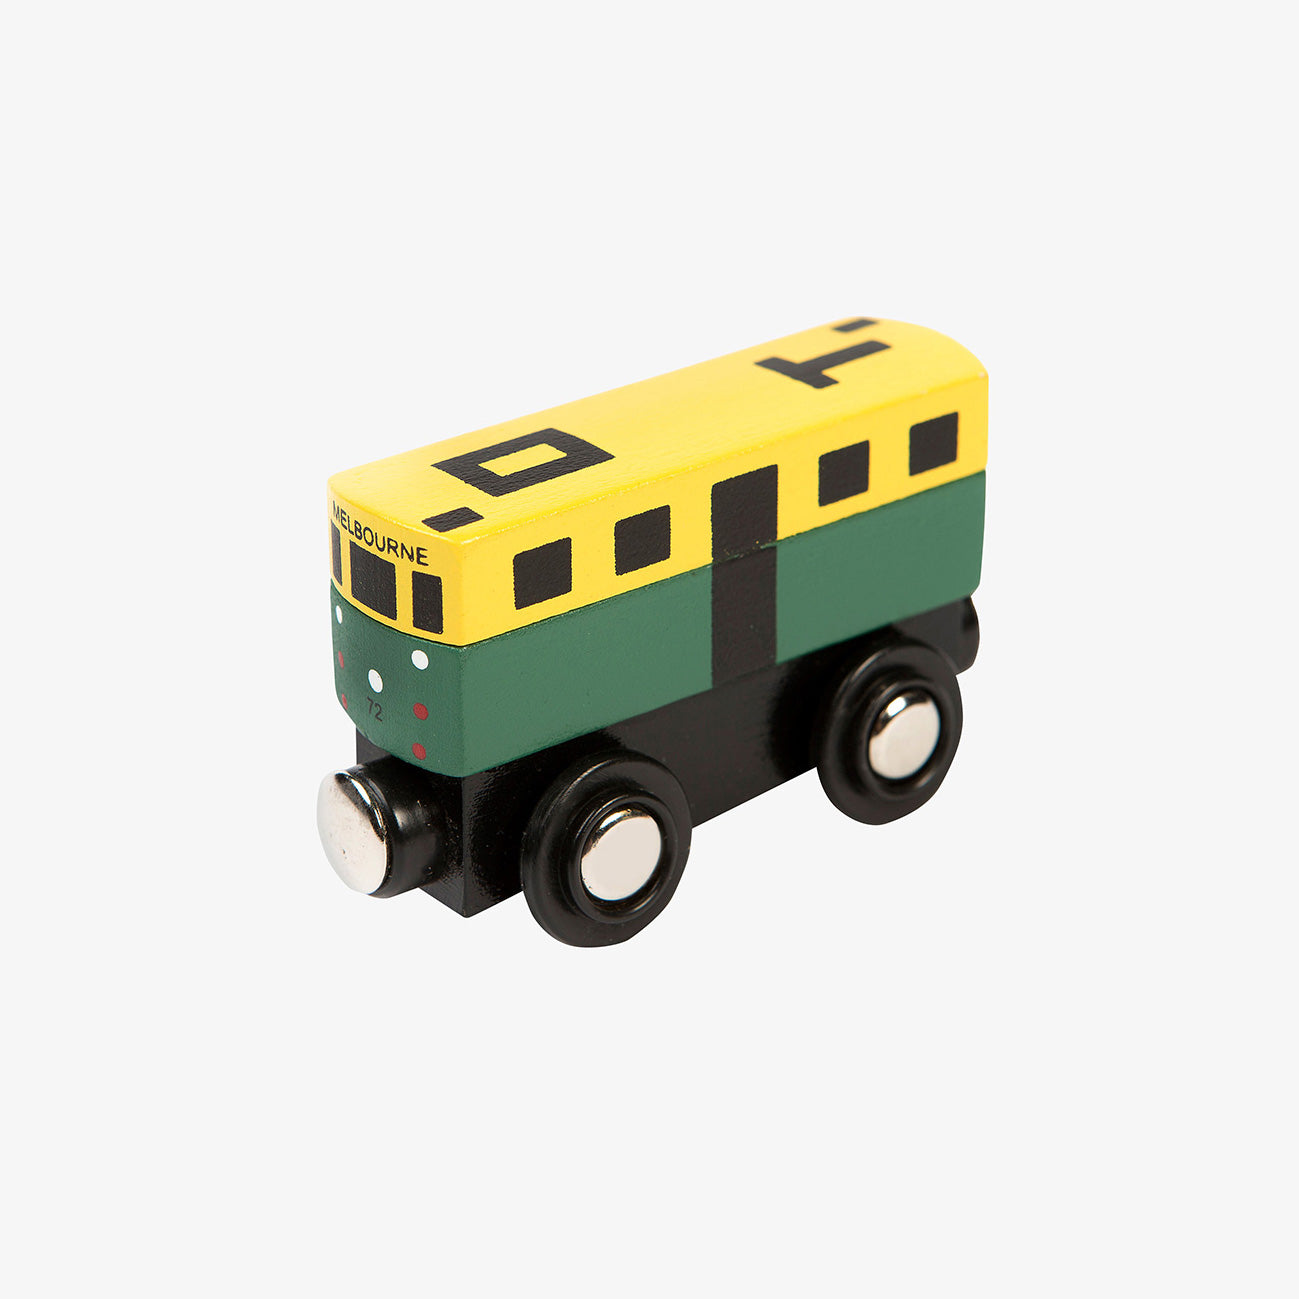 Make Me Iconic wood toy Australian Gifts Souvenirs mini tram